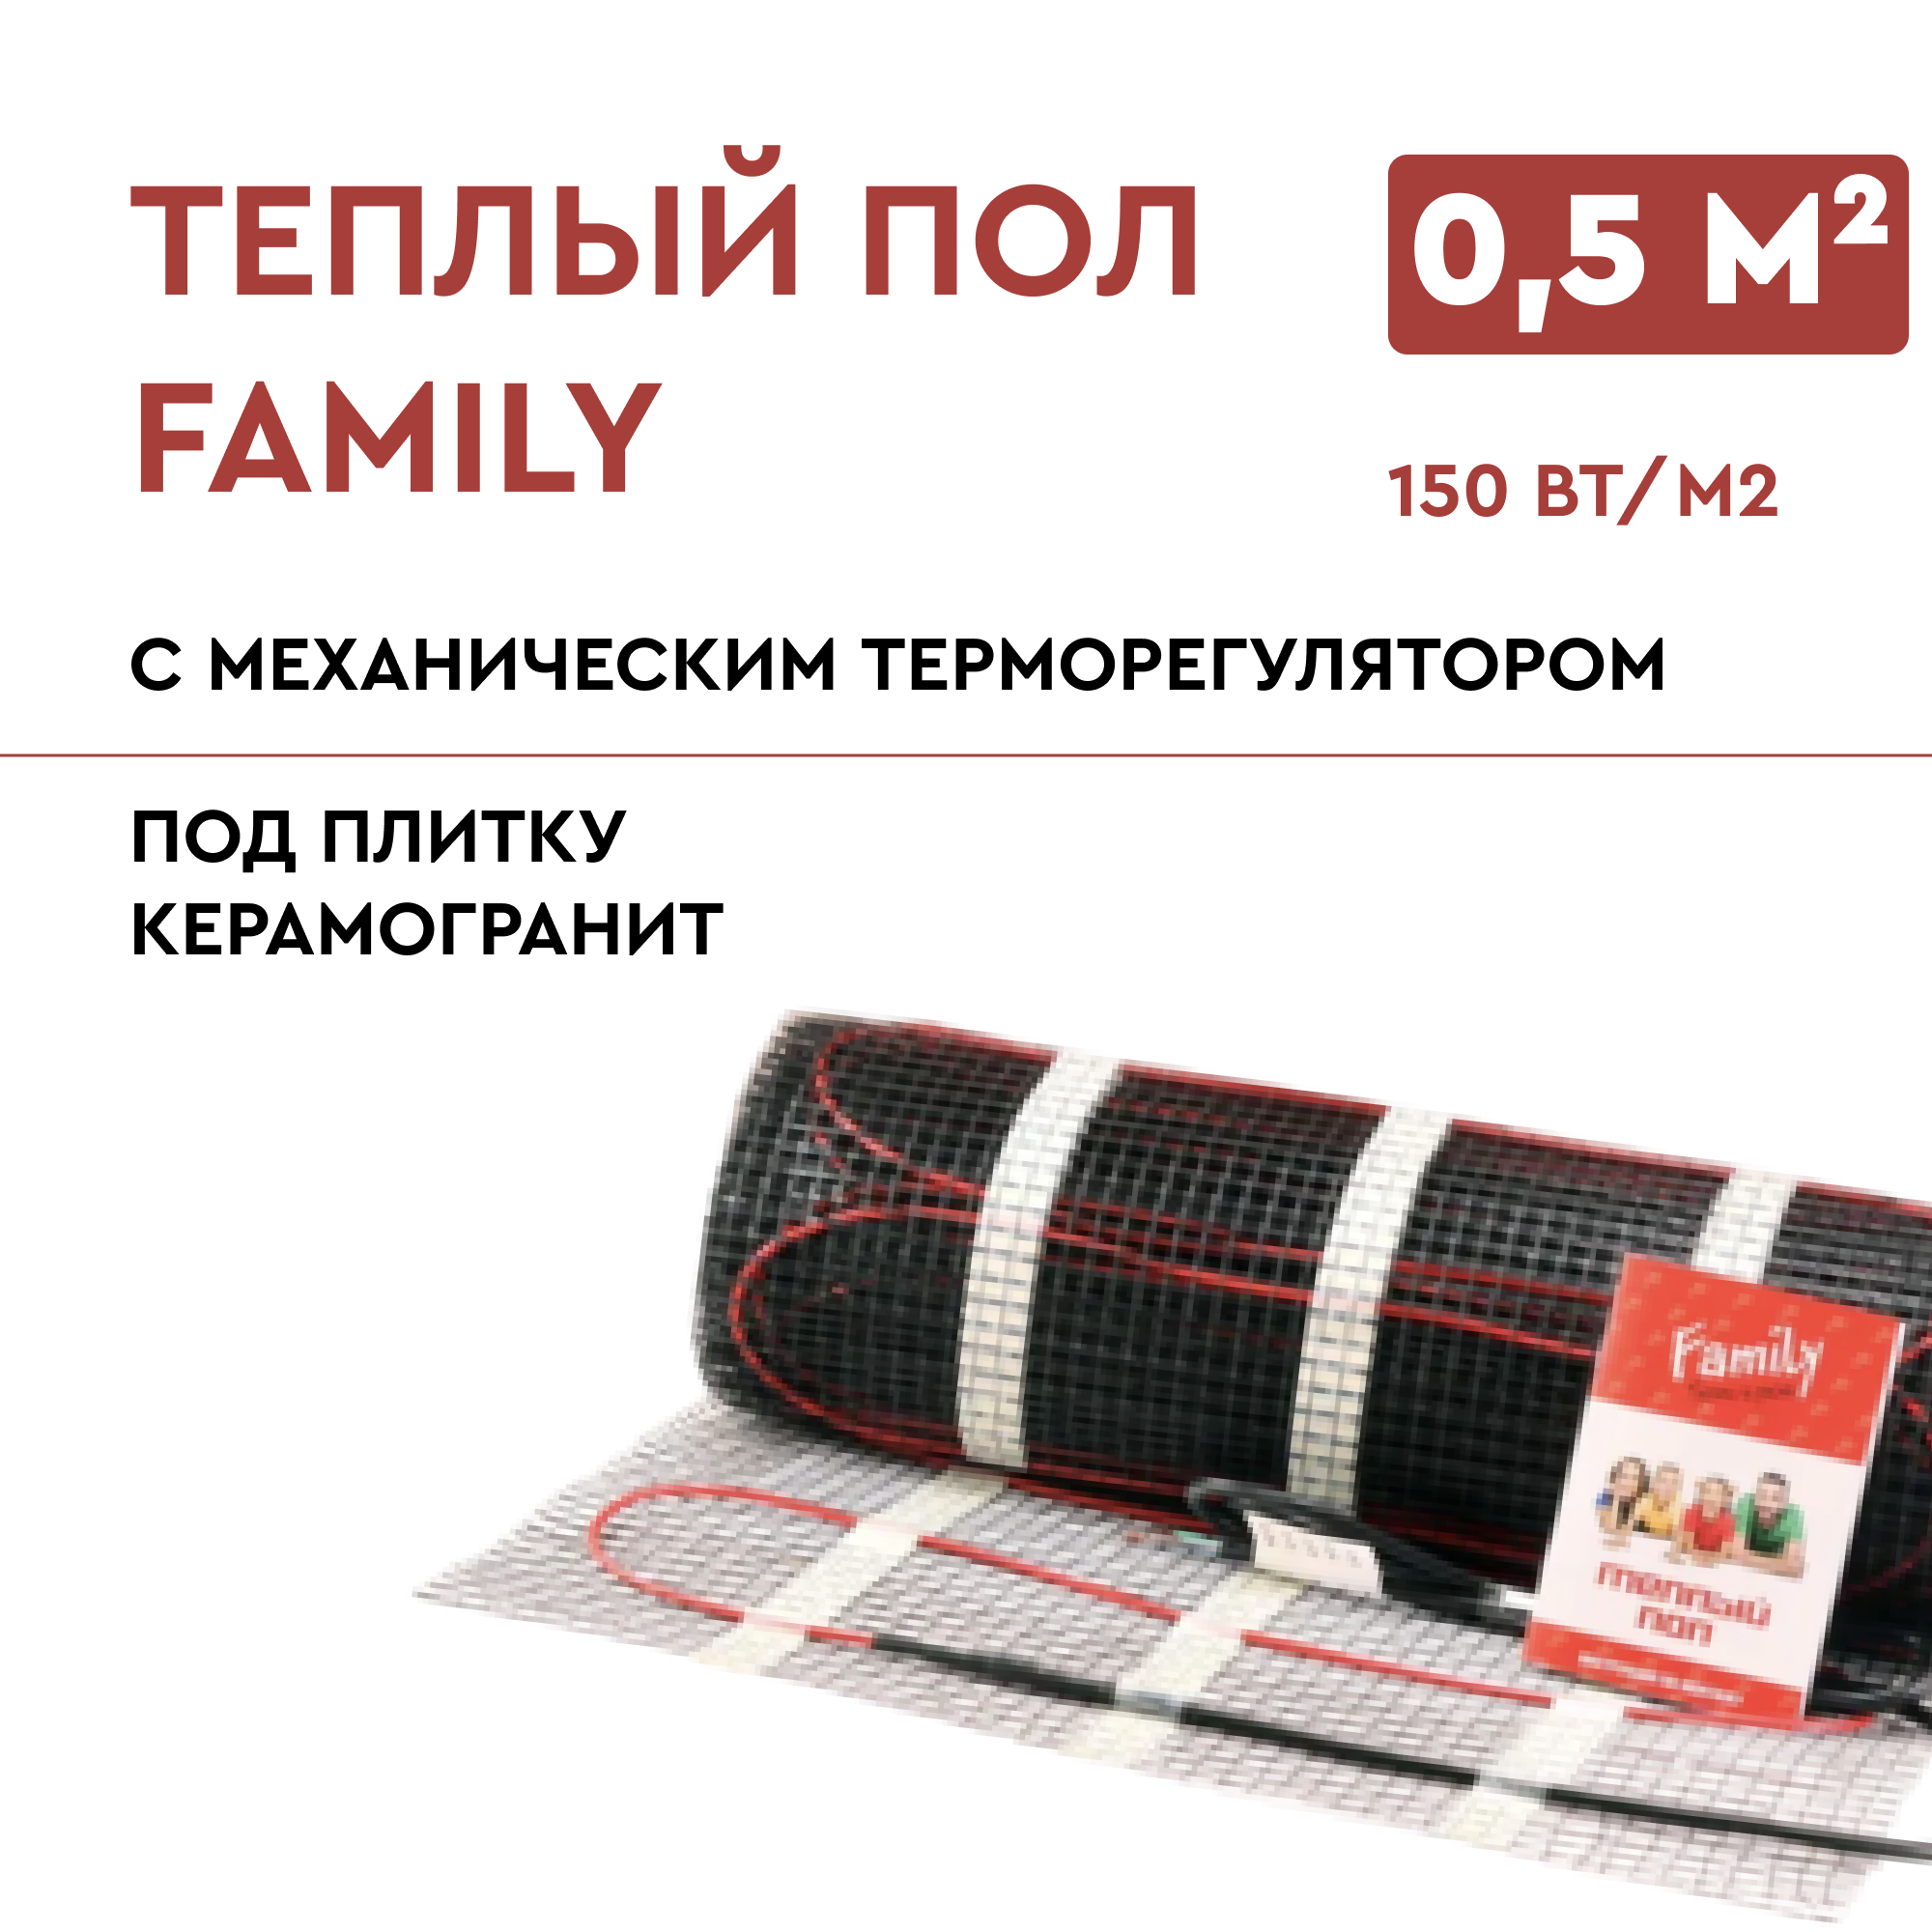 Теплый пол Family 0,5м2/75Вт в комплекте с терморегулятором